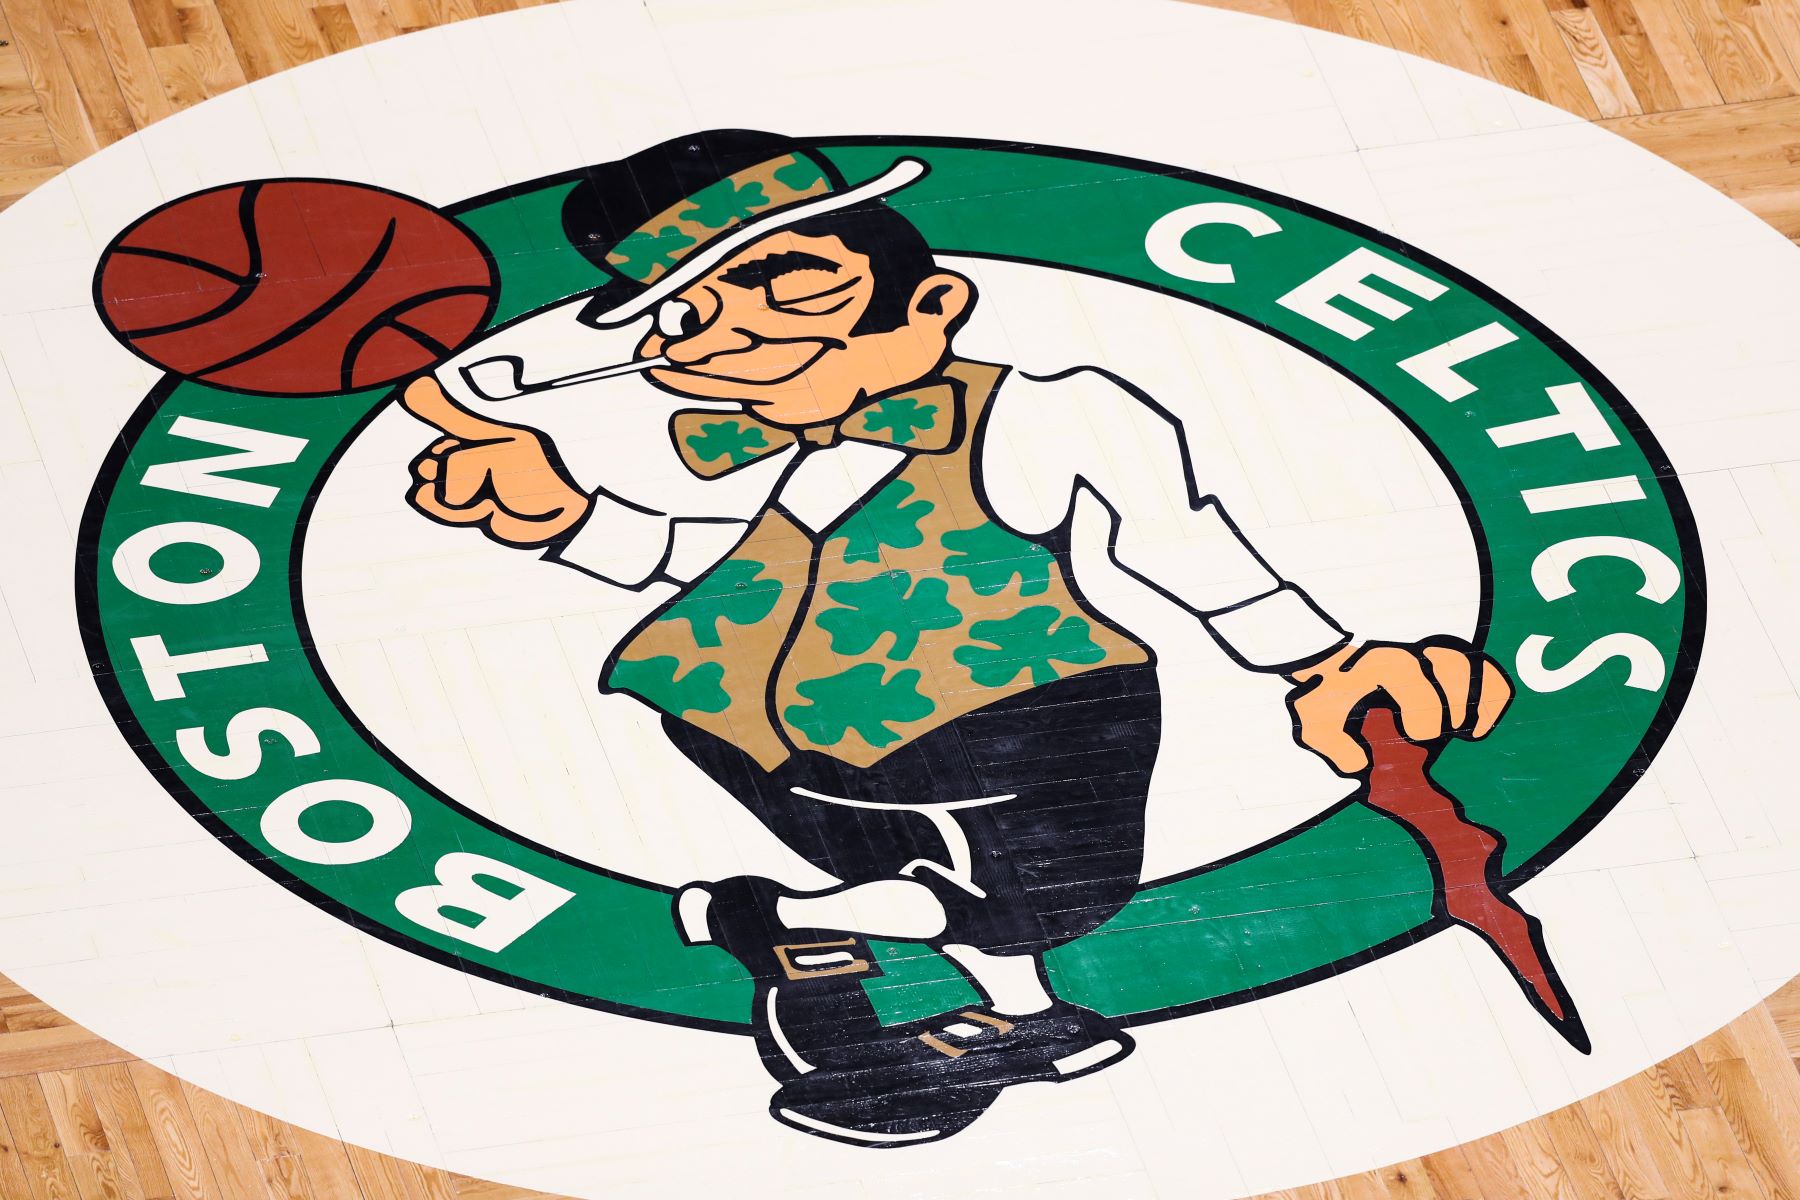 NBA team Boston Celtics logo on the court during a game against the Charlotte Hornets